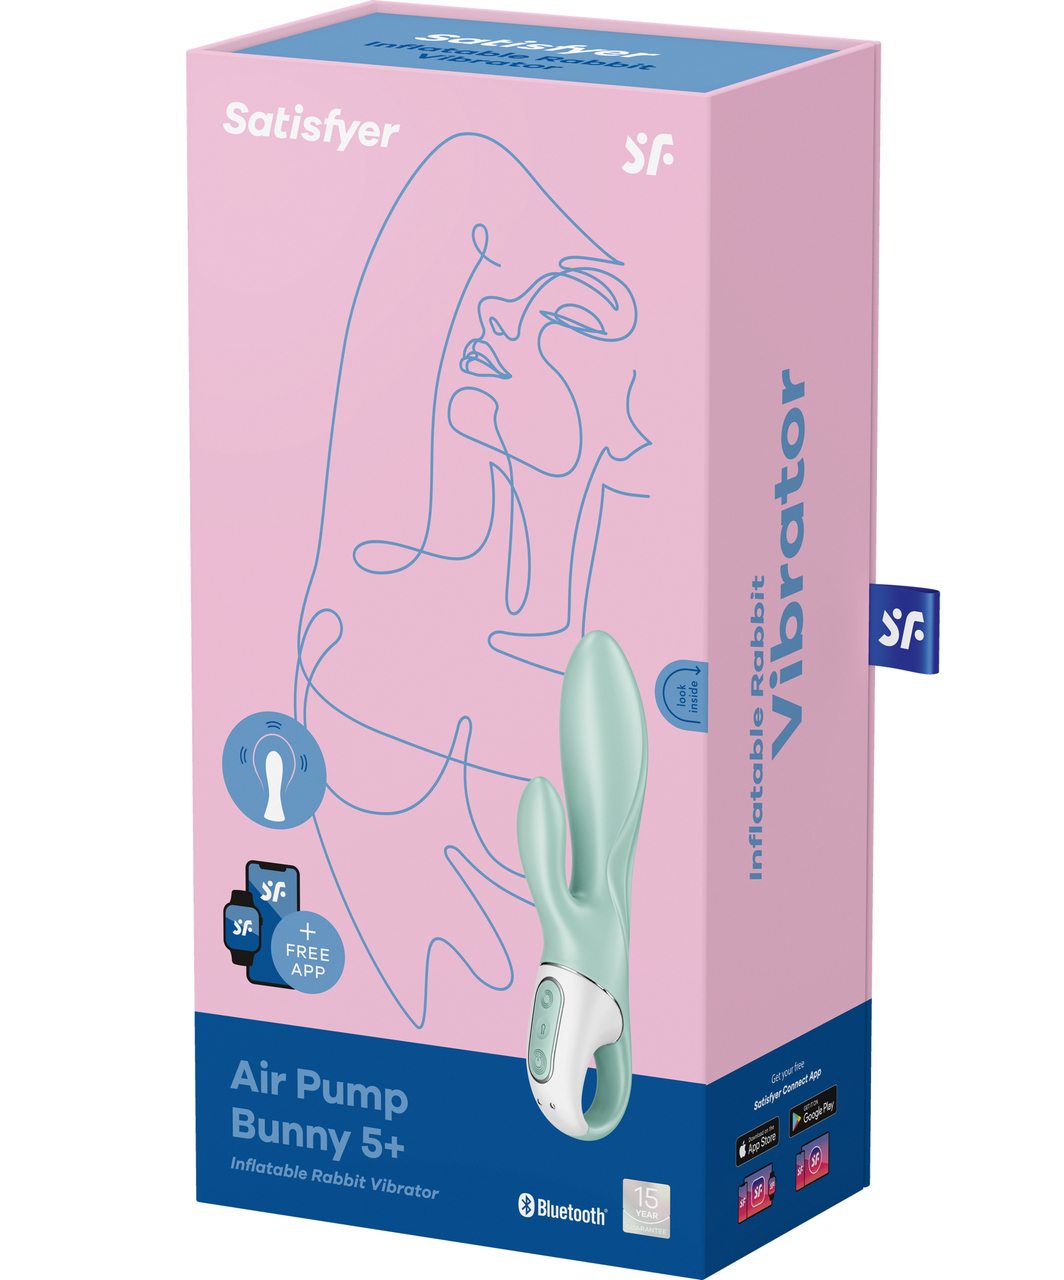 Satisfyer Air Pump Bunny 5+ vibrator